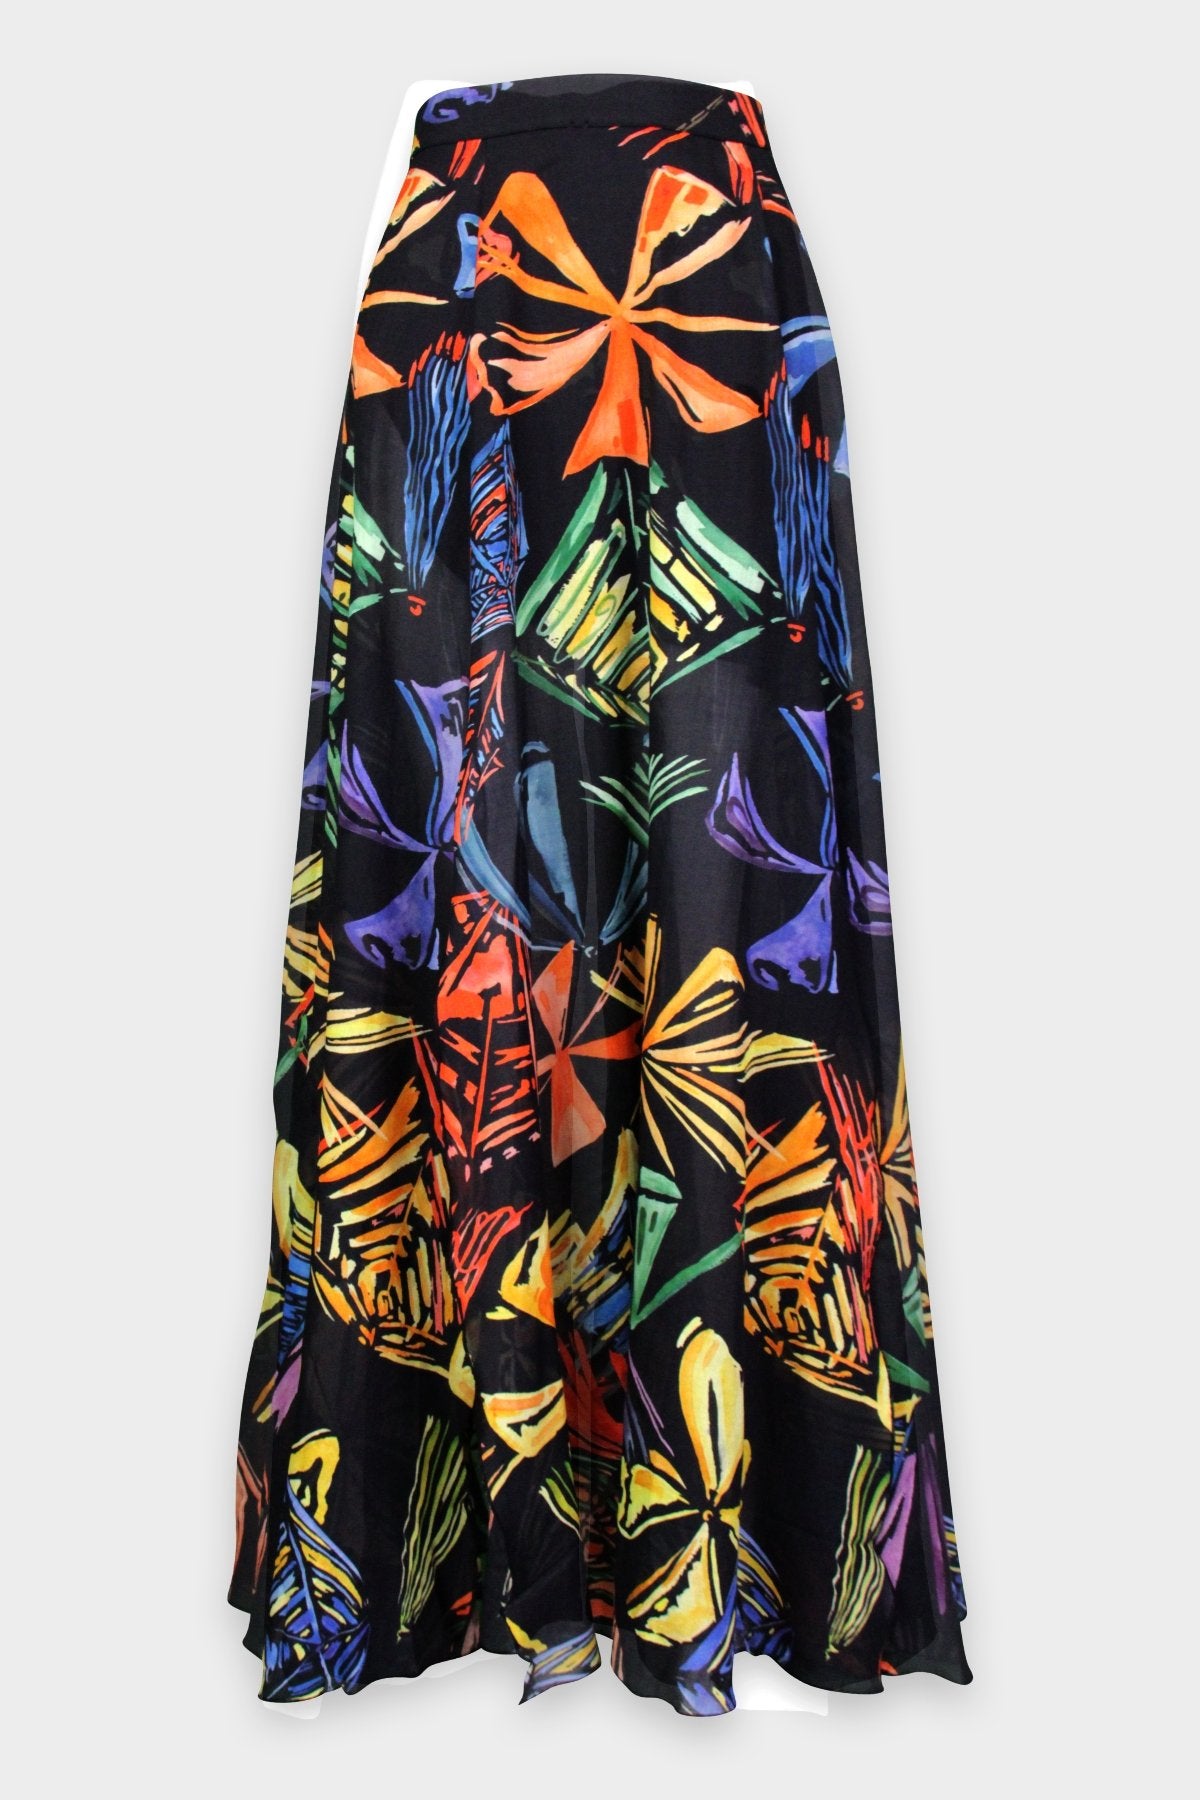 Mia Long Skirt in Black Print - shop-olivia.com